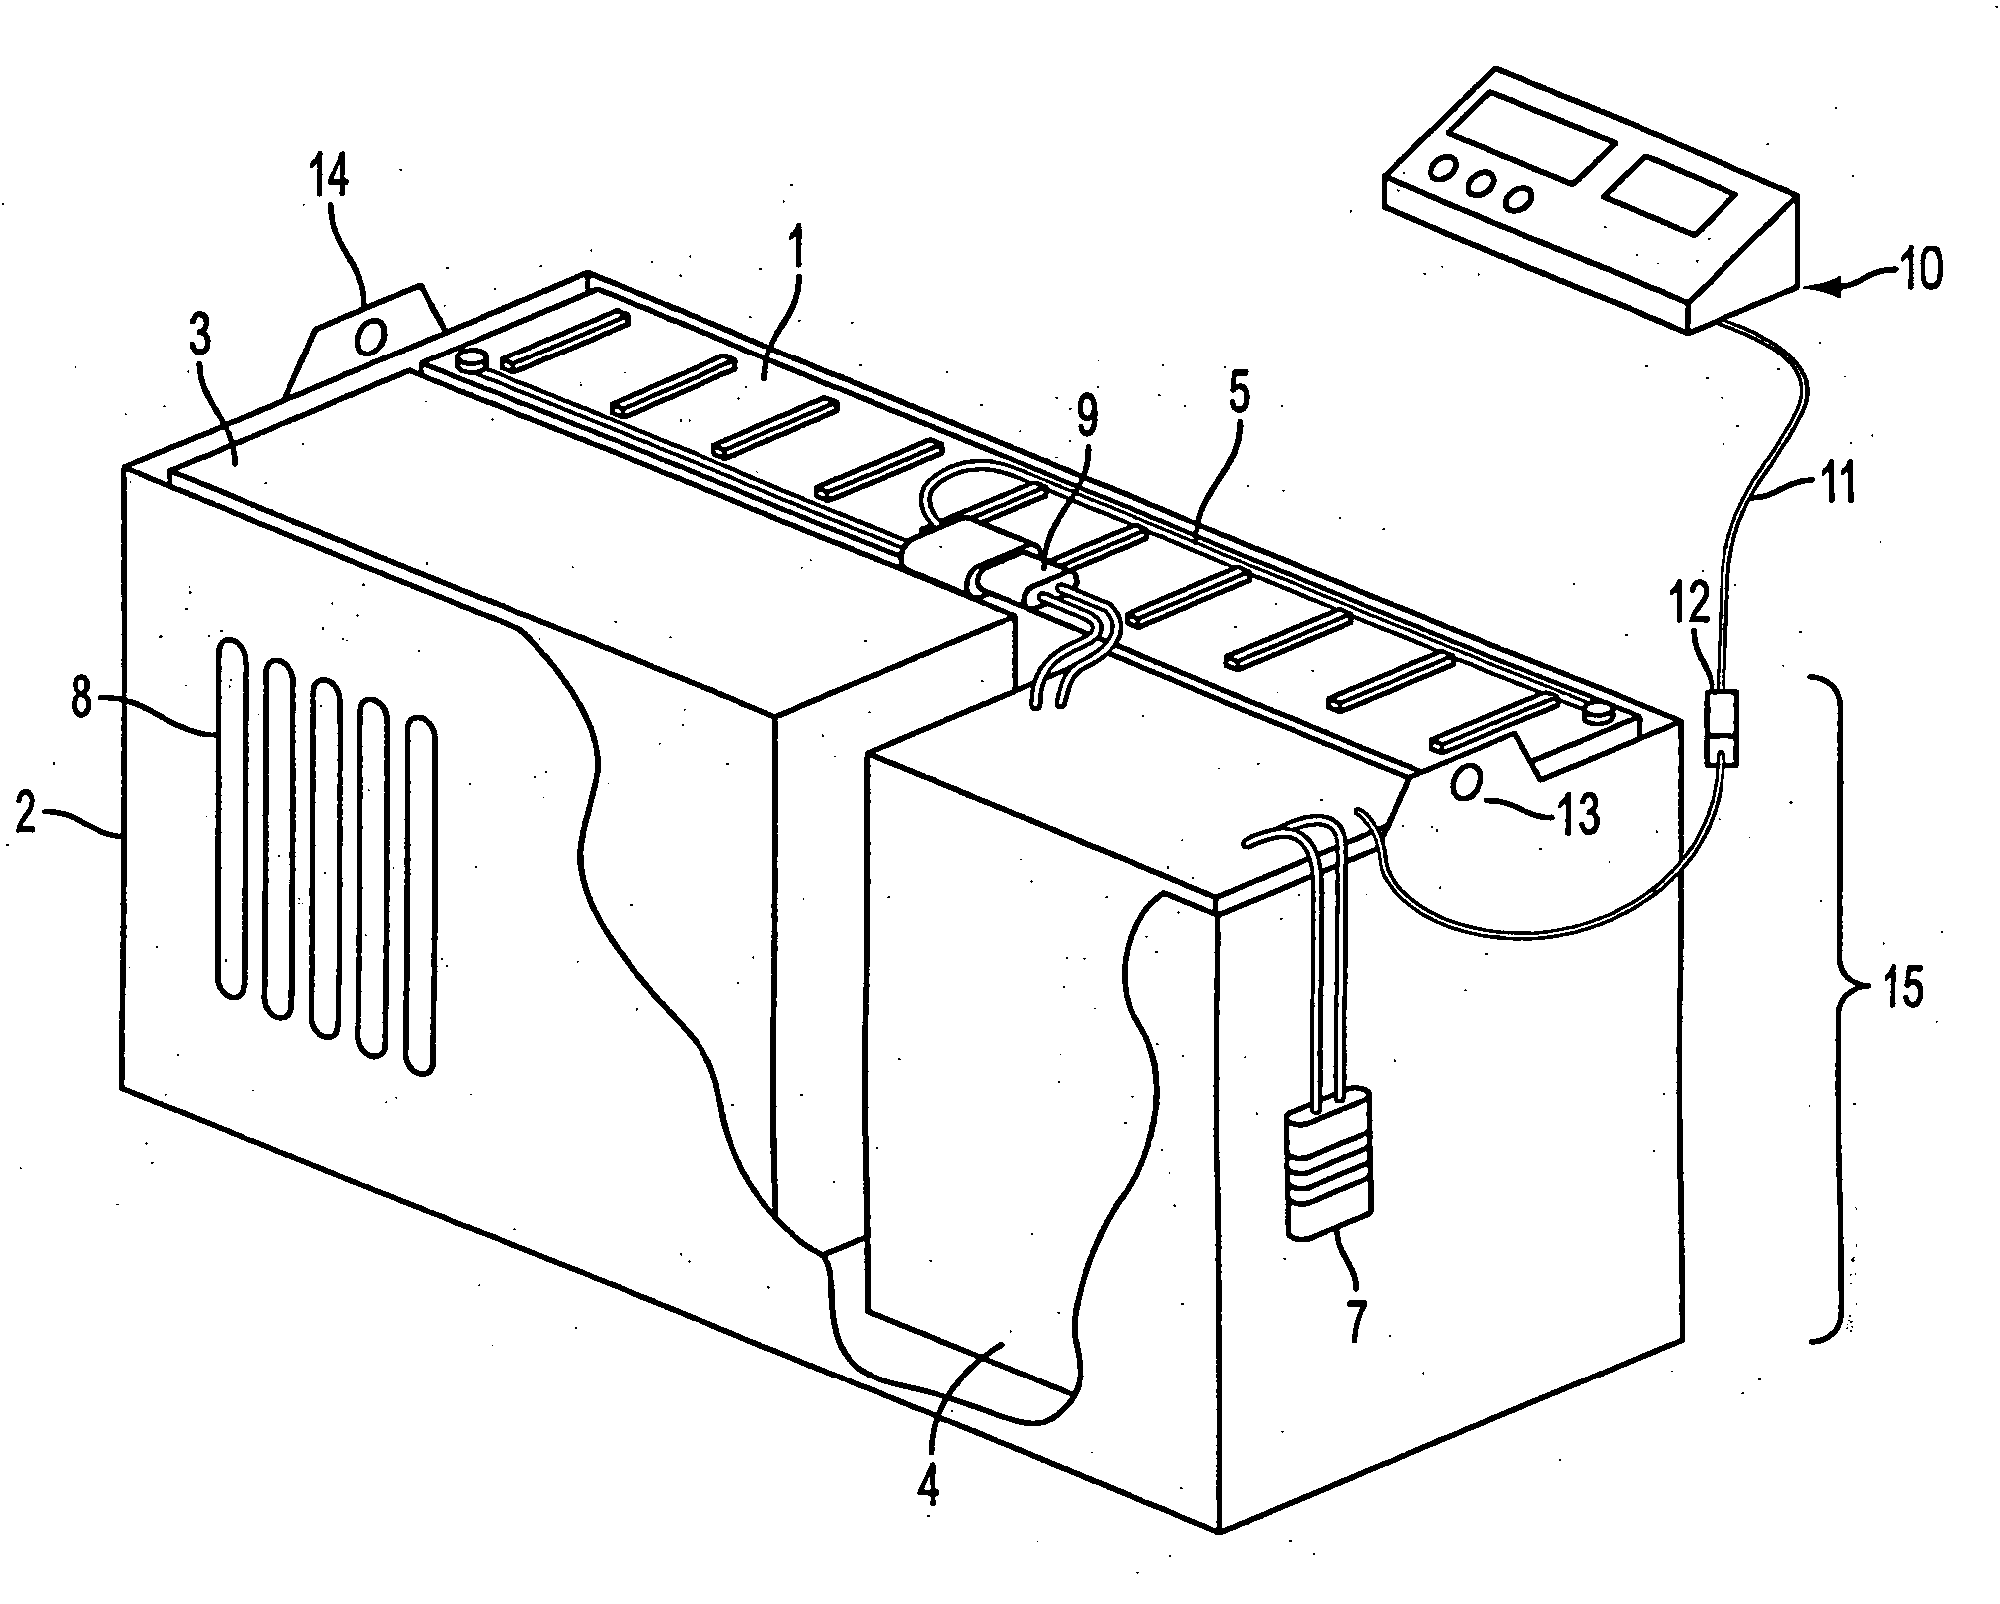 Hybrid power supply module